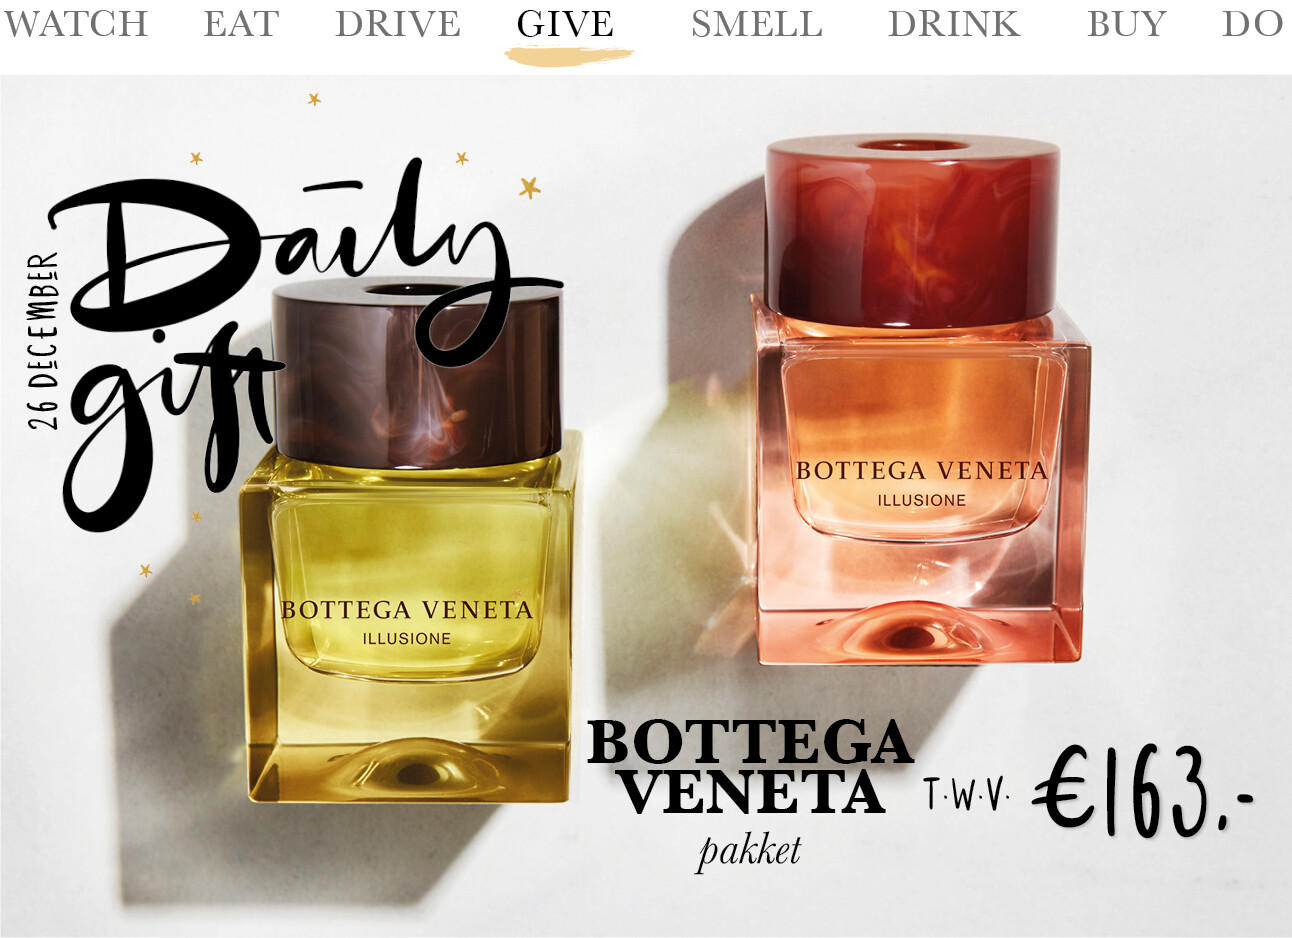 Today we give: een Bottega Veneta pakket